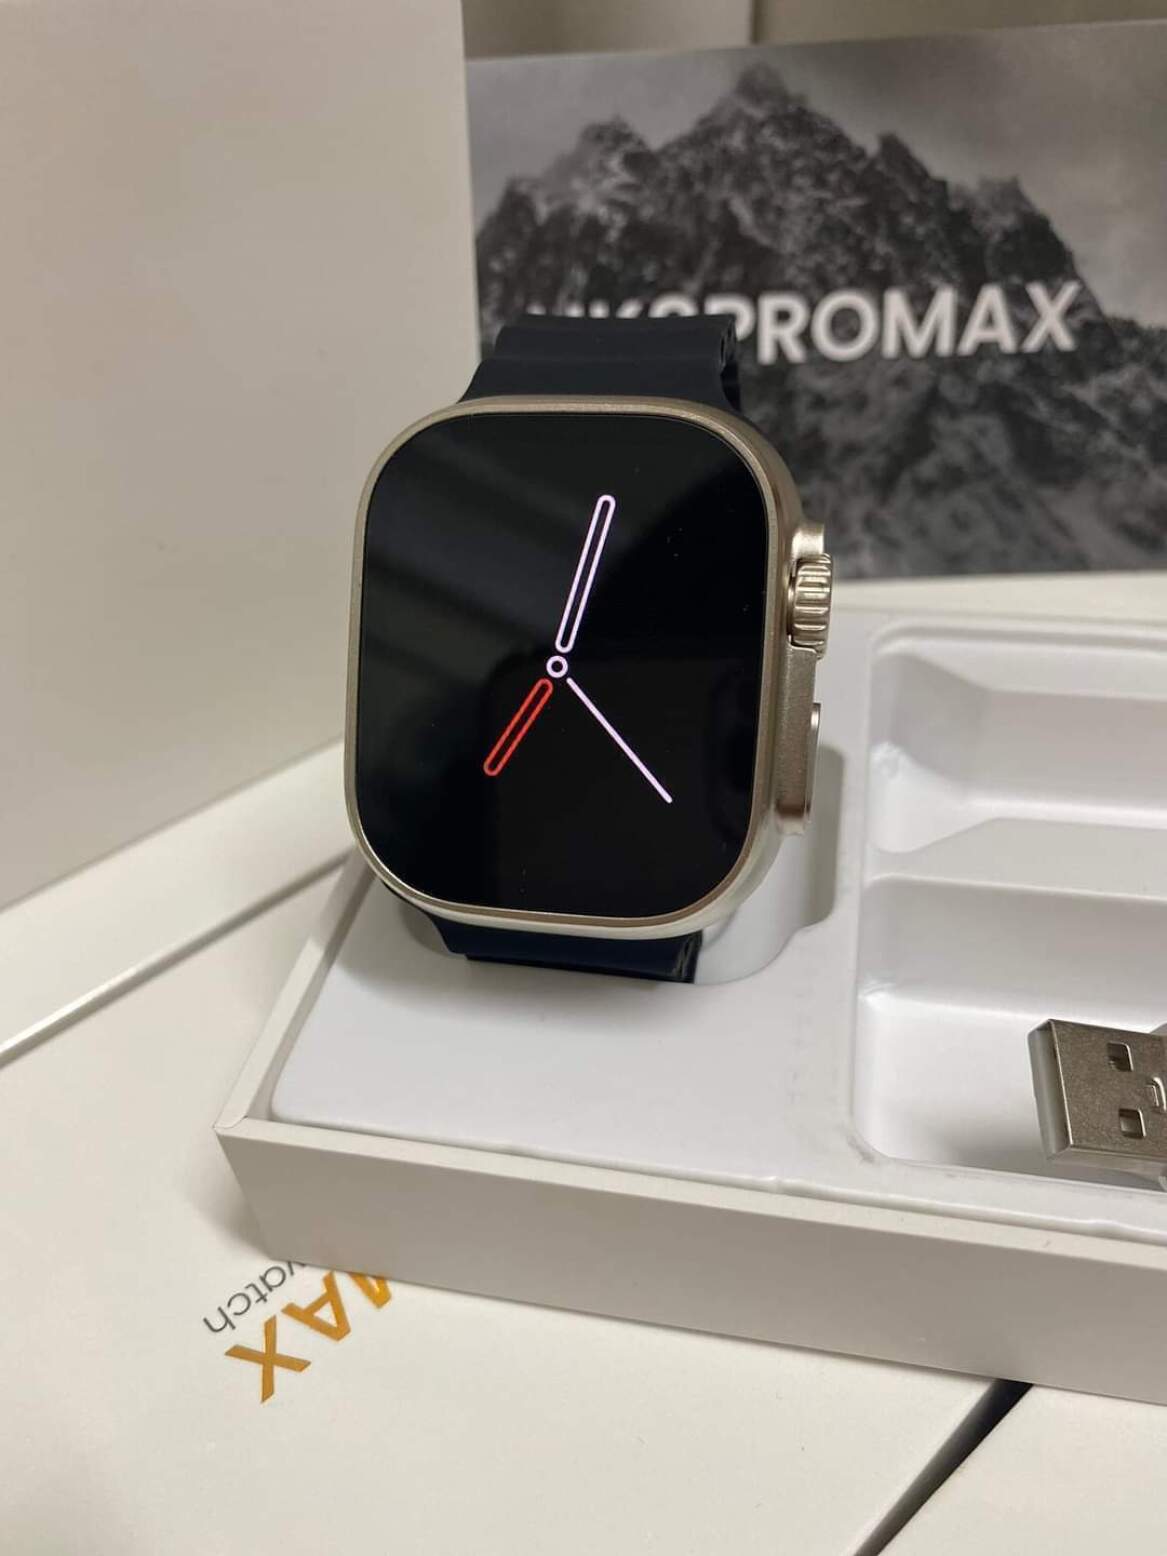  smart watch hk8 pro max 